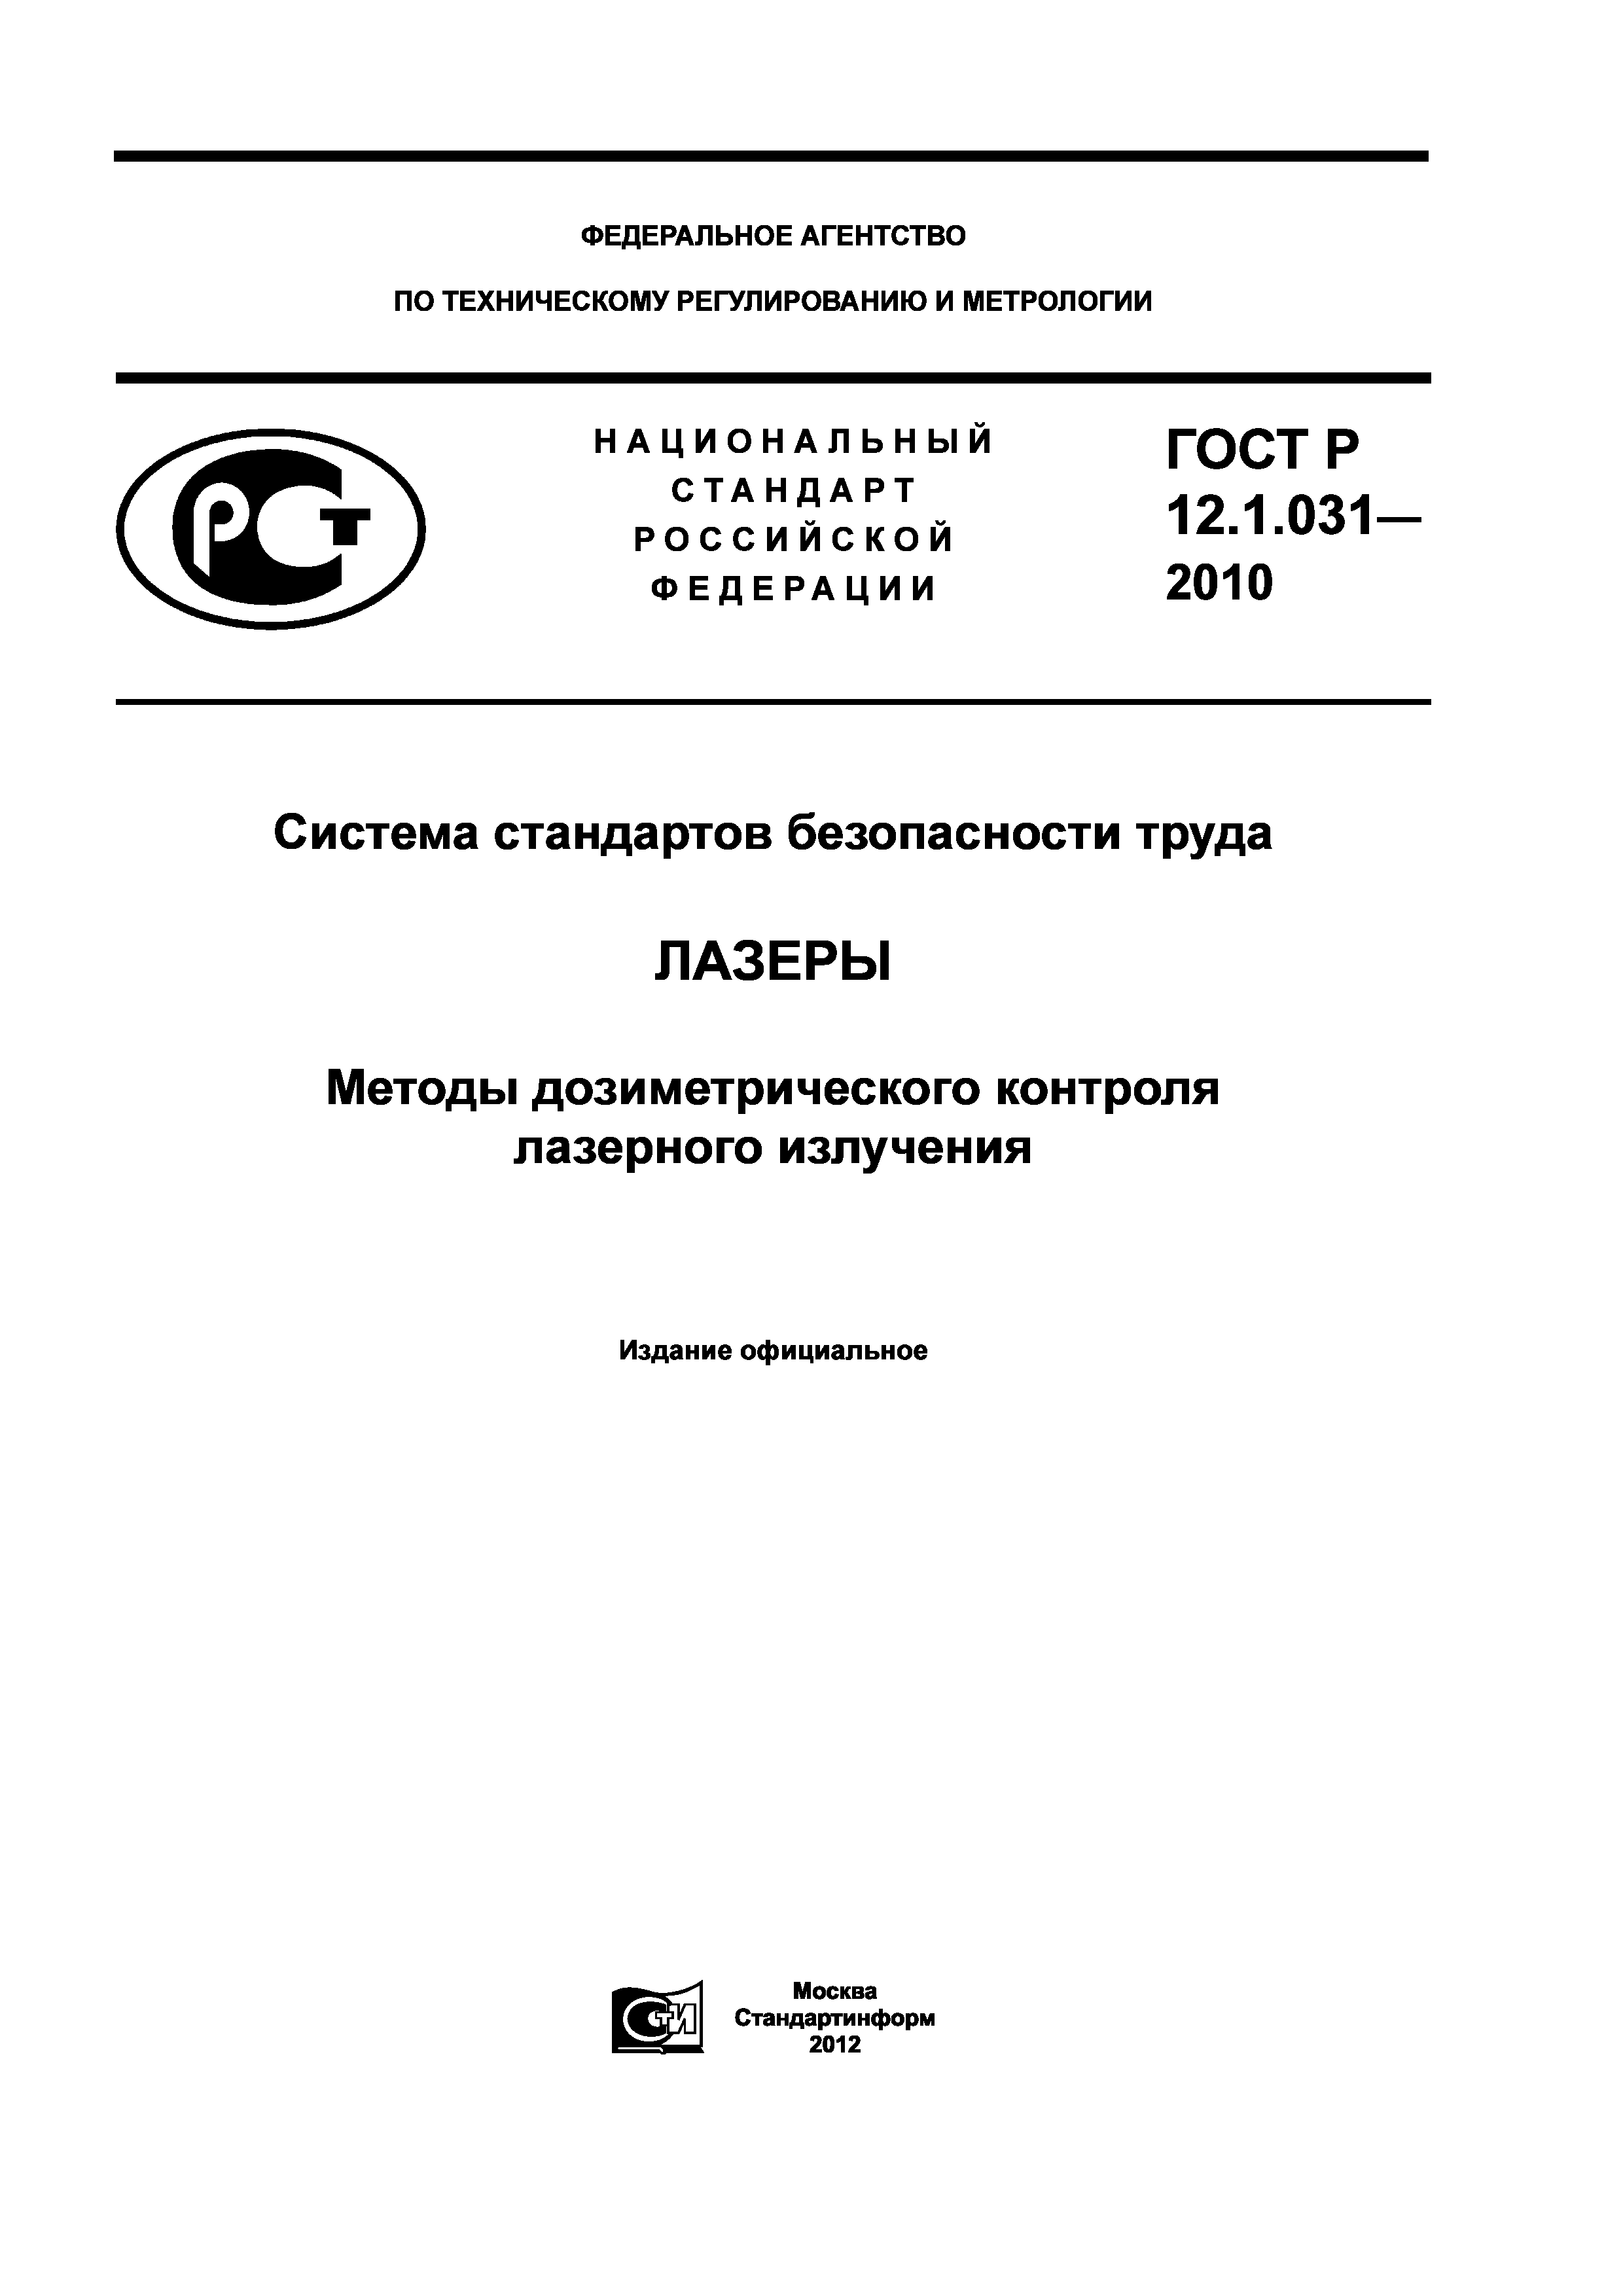 ГОСТ Р 12.1.031-2010